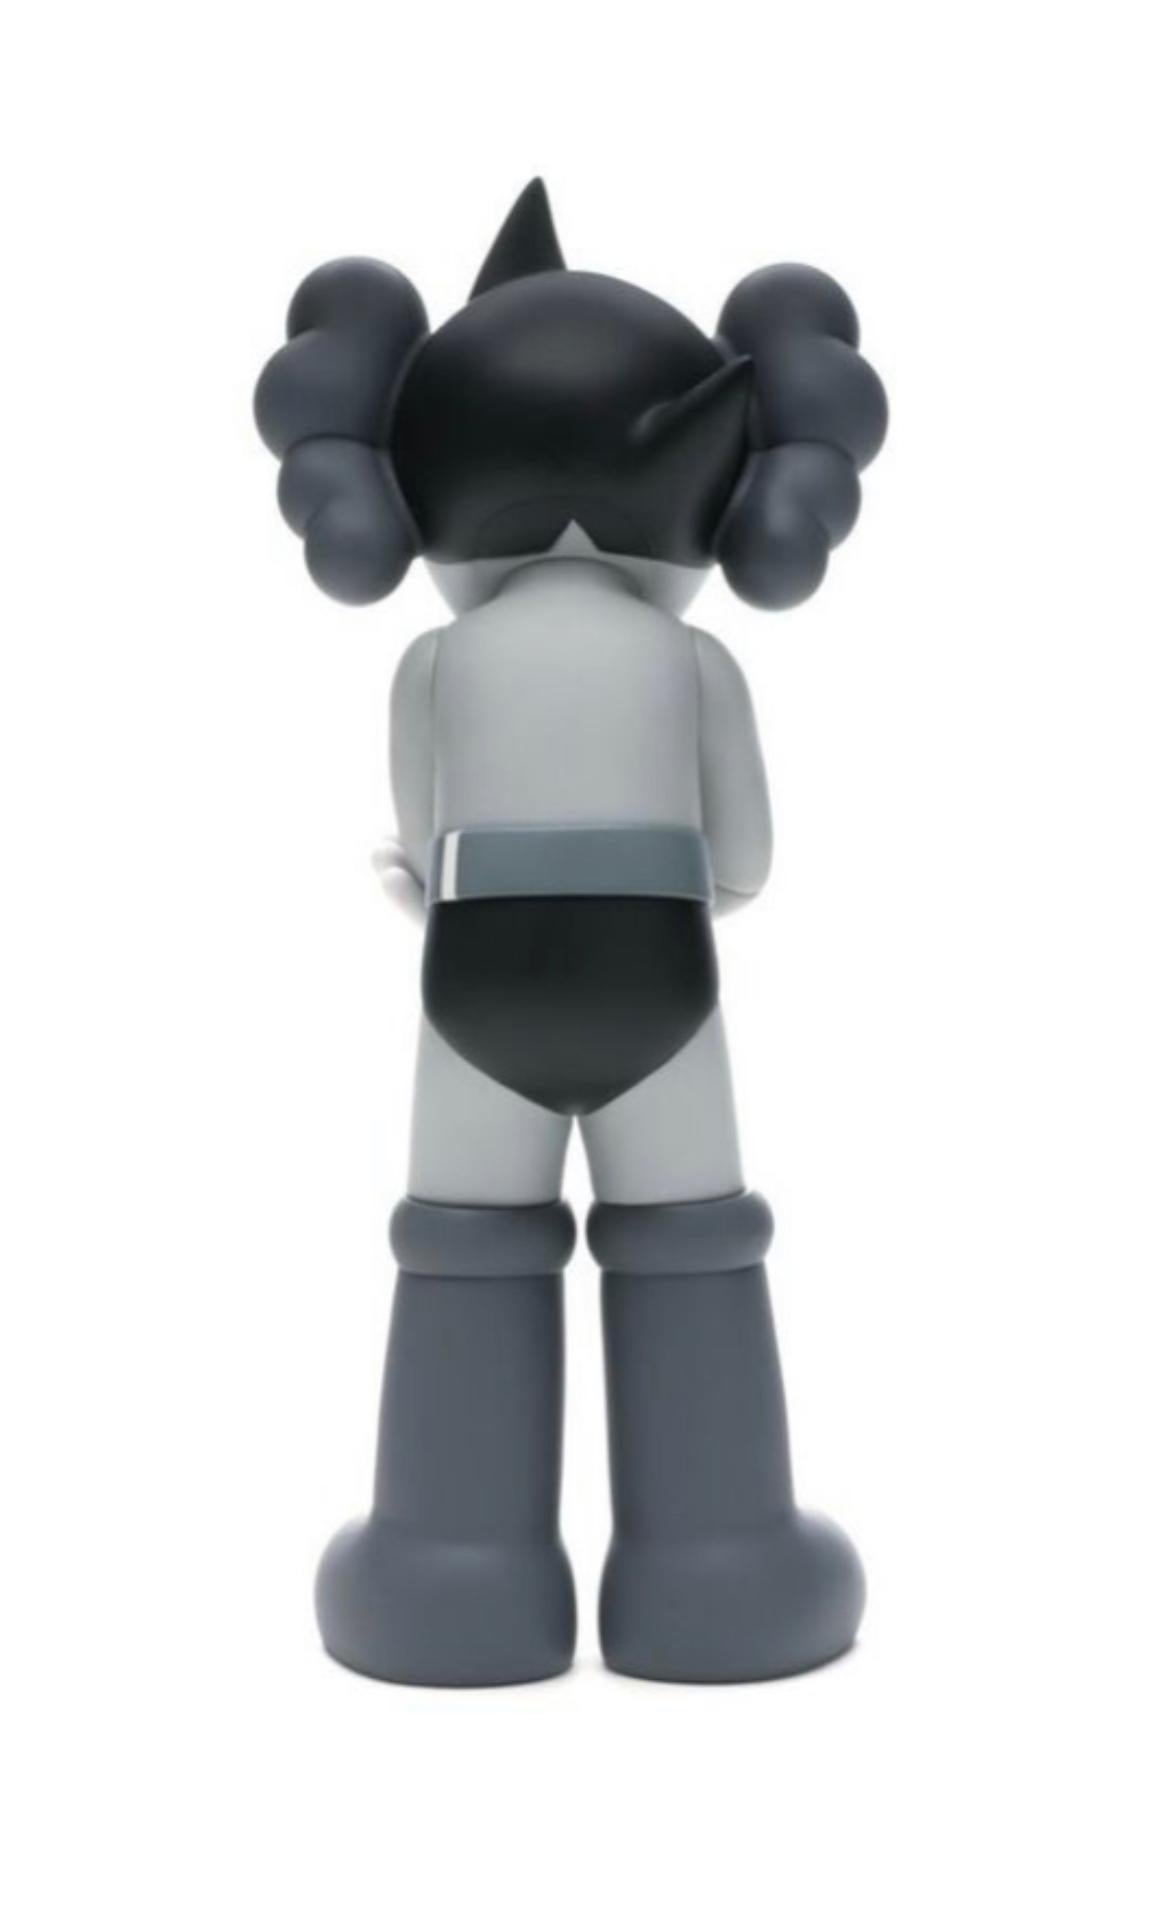 Artist name: KAWS
Title: Astro Boy
Size: 38.1 x 16.5 x 12.1cm
Medium: Vinyl Figure
Edition of 300
Stamped underfoot